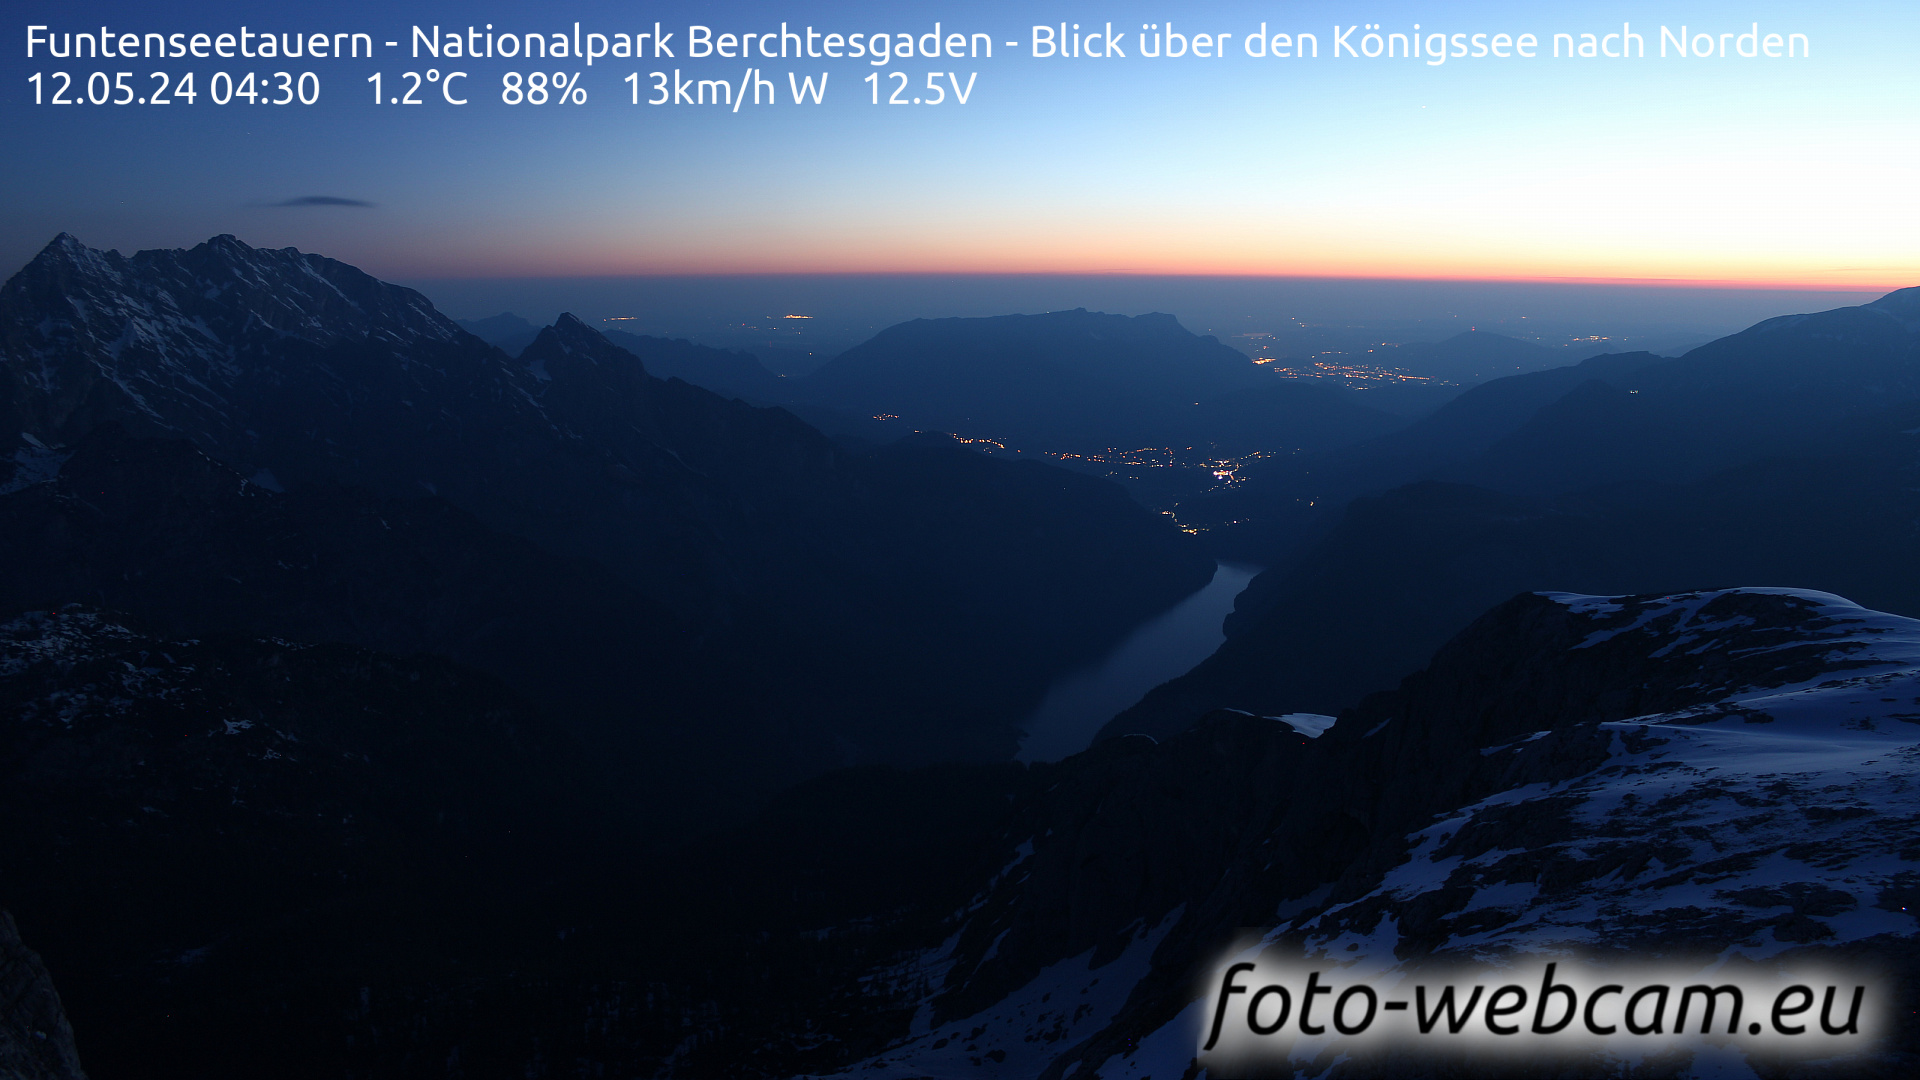 Berchtesgaden Me. 04:48